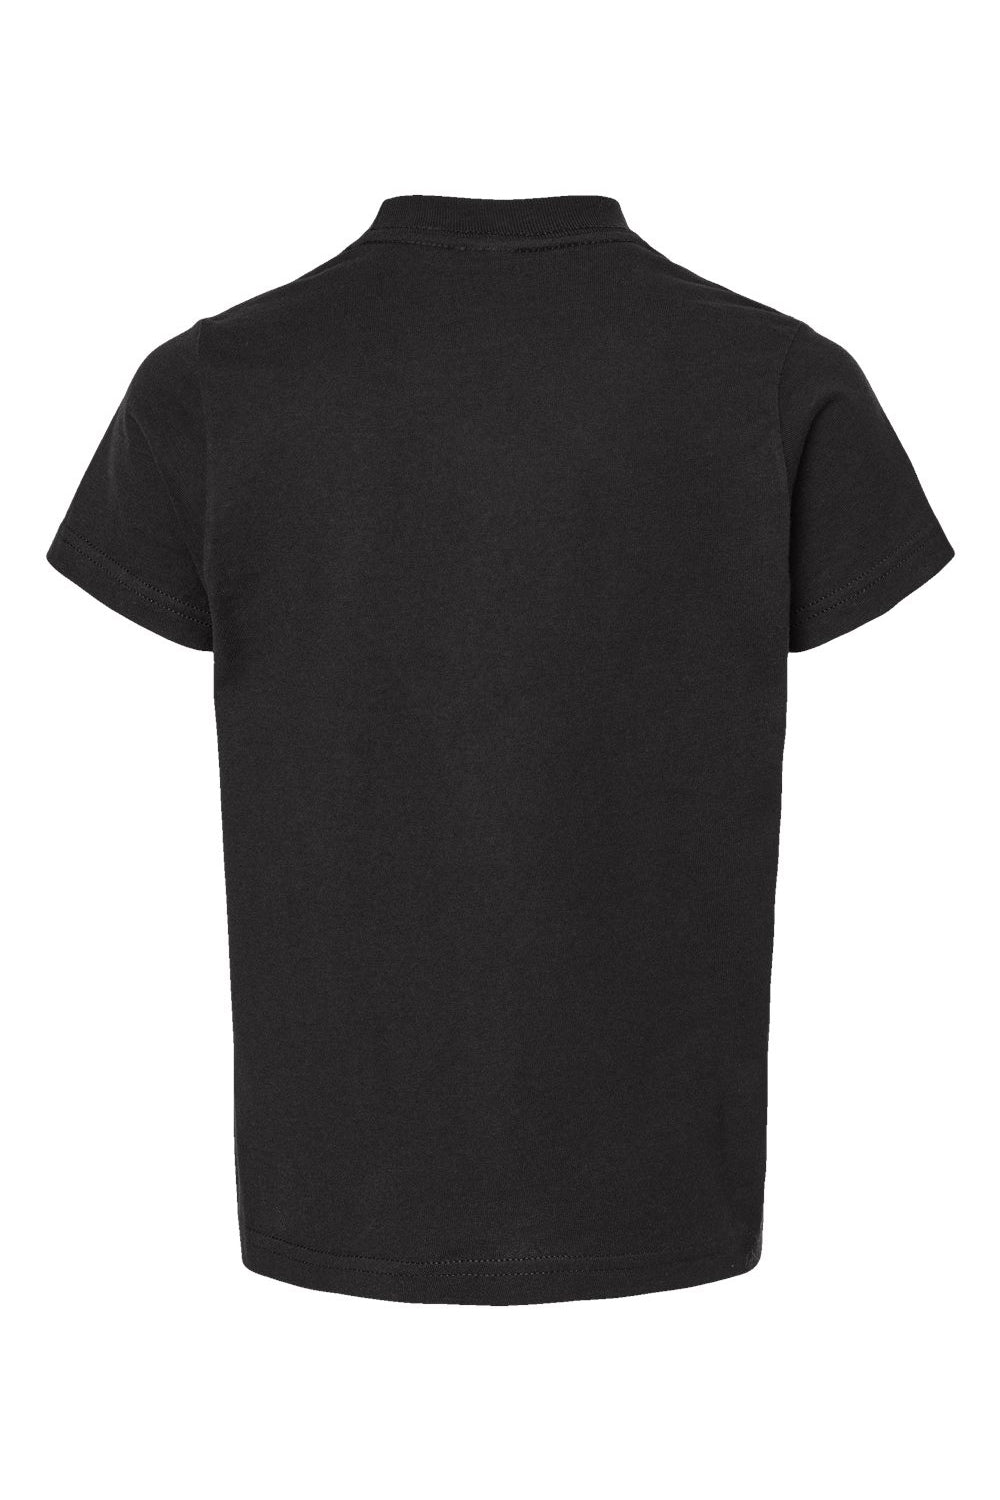 Tultex 235 Youth Fine Jersey Short Sleeve Crewneck T-Shirt Black Flat Back